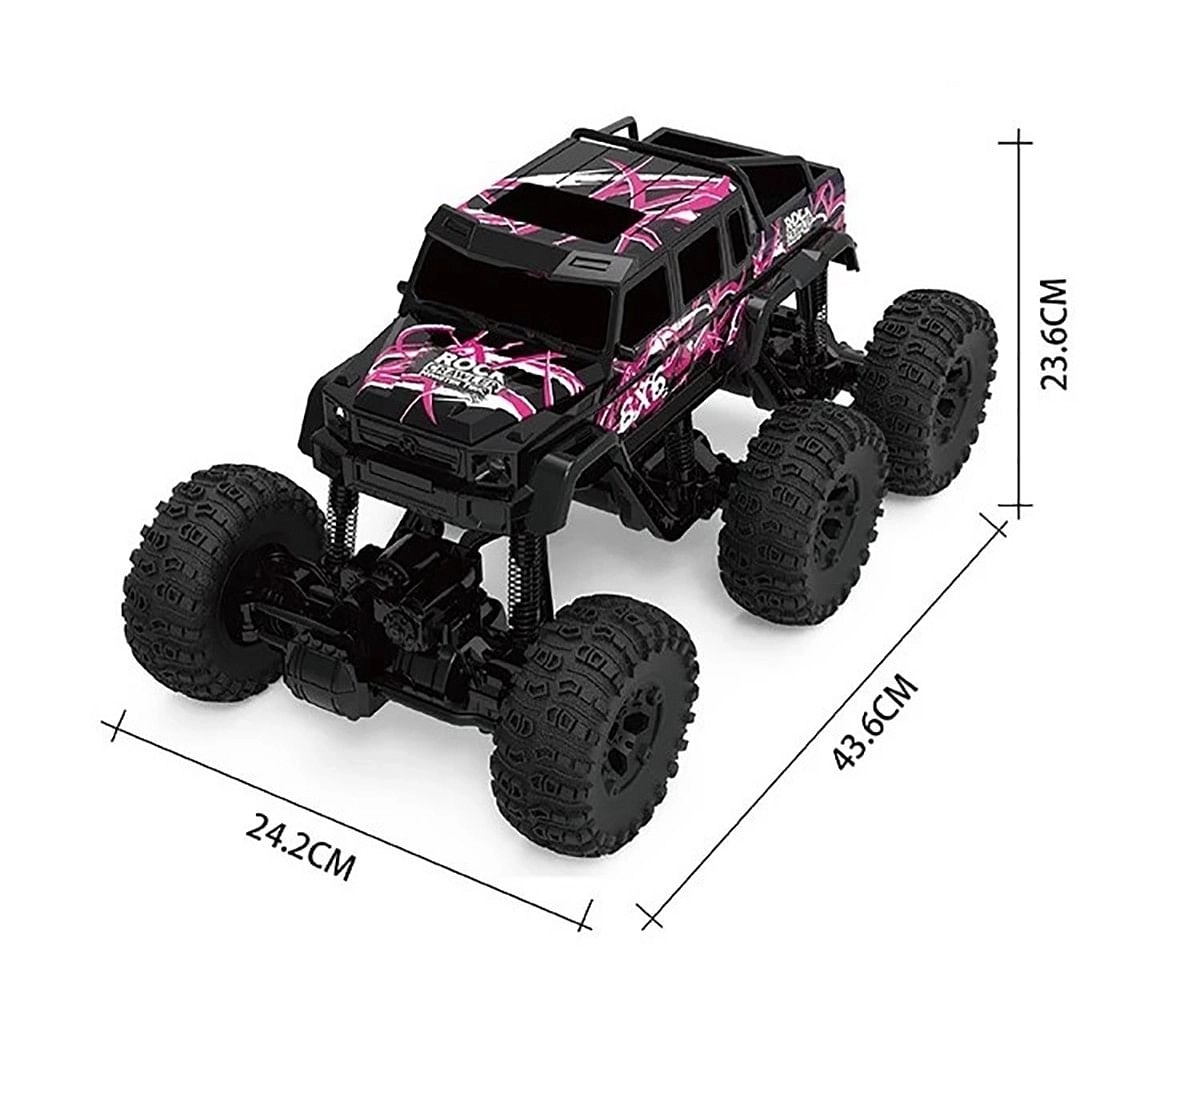 Rw 24ghz Remote Control Rock Crawler Car Remote Control Toys for Kids age 8Y+ 